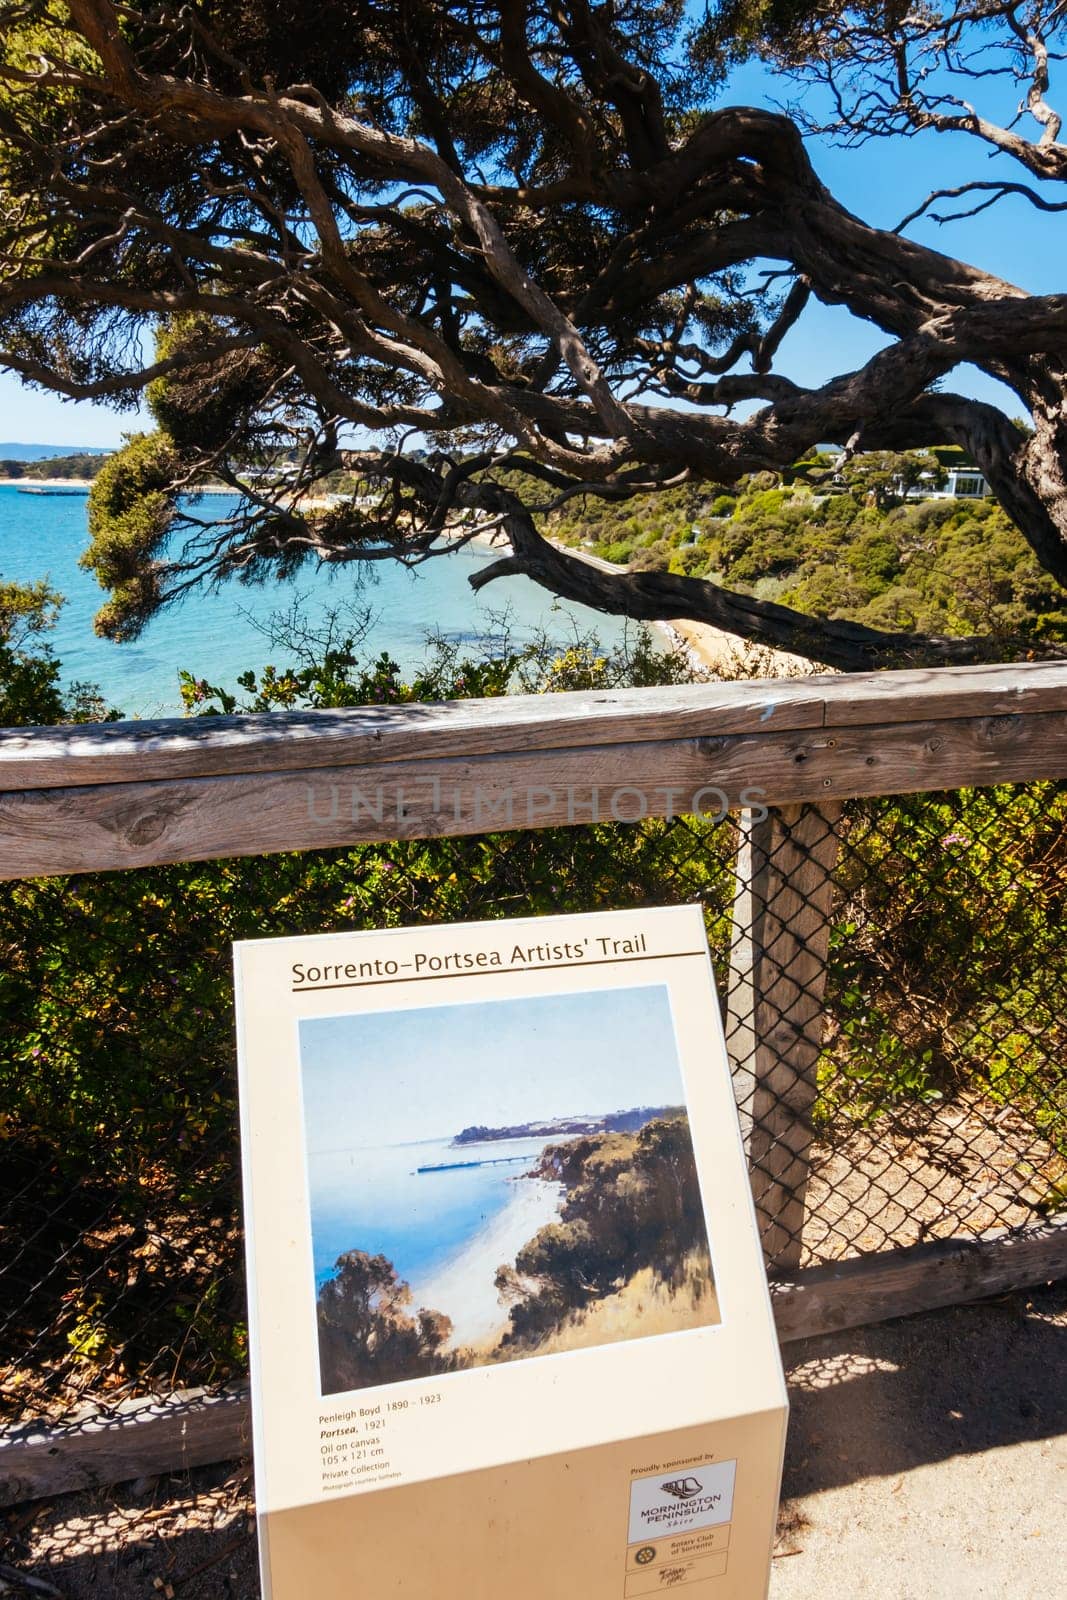 Sorrento - Portsea Artists' Trail in Australia by FiledIMAGE